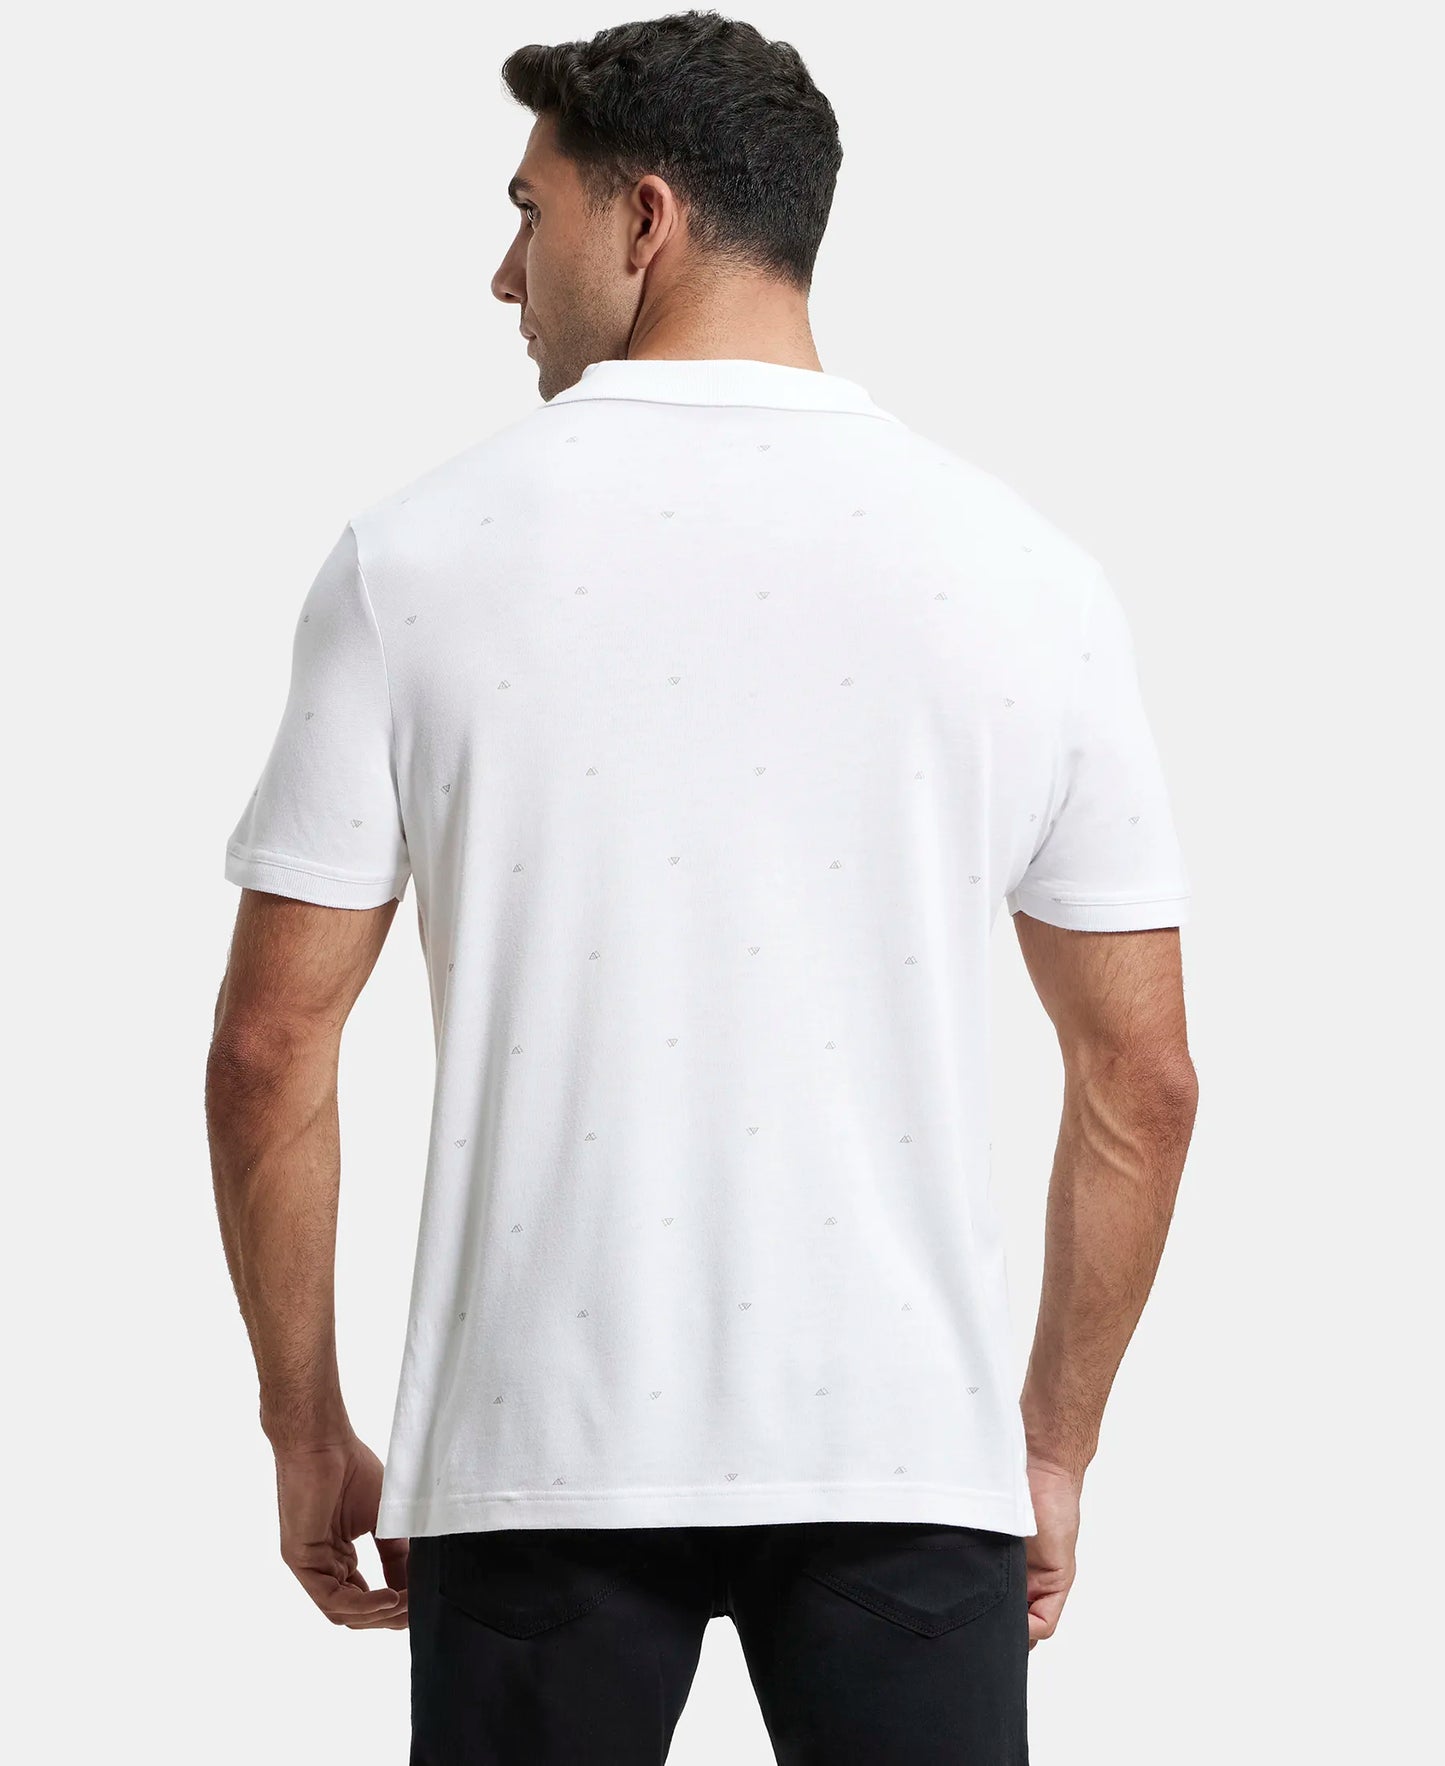 Tencel Micro Modal and Cotton Blend Printed Half Sleeve Polo T-Shirt - White-3